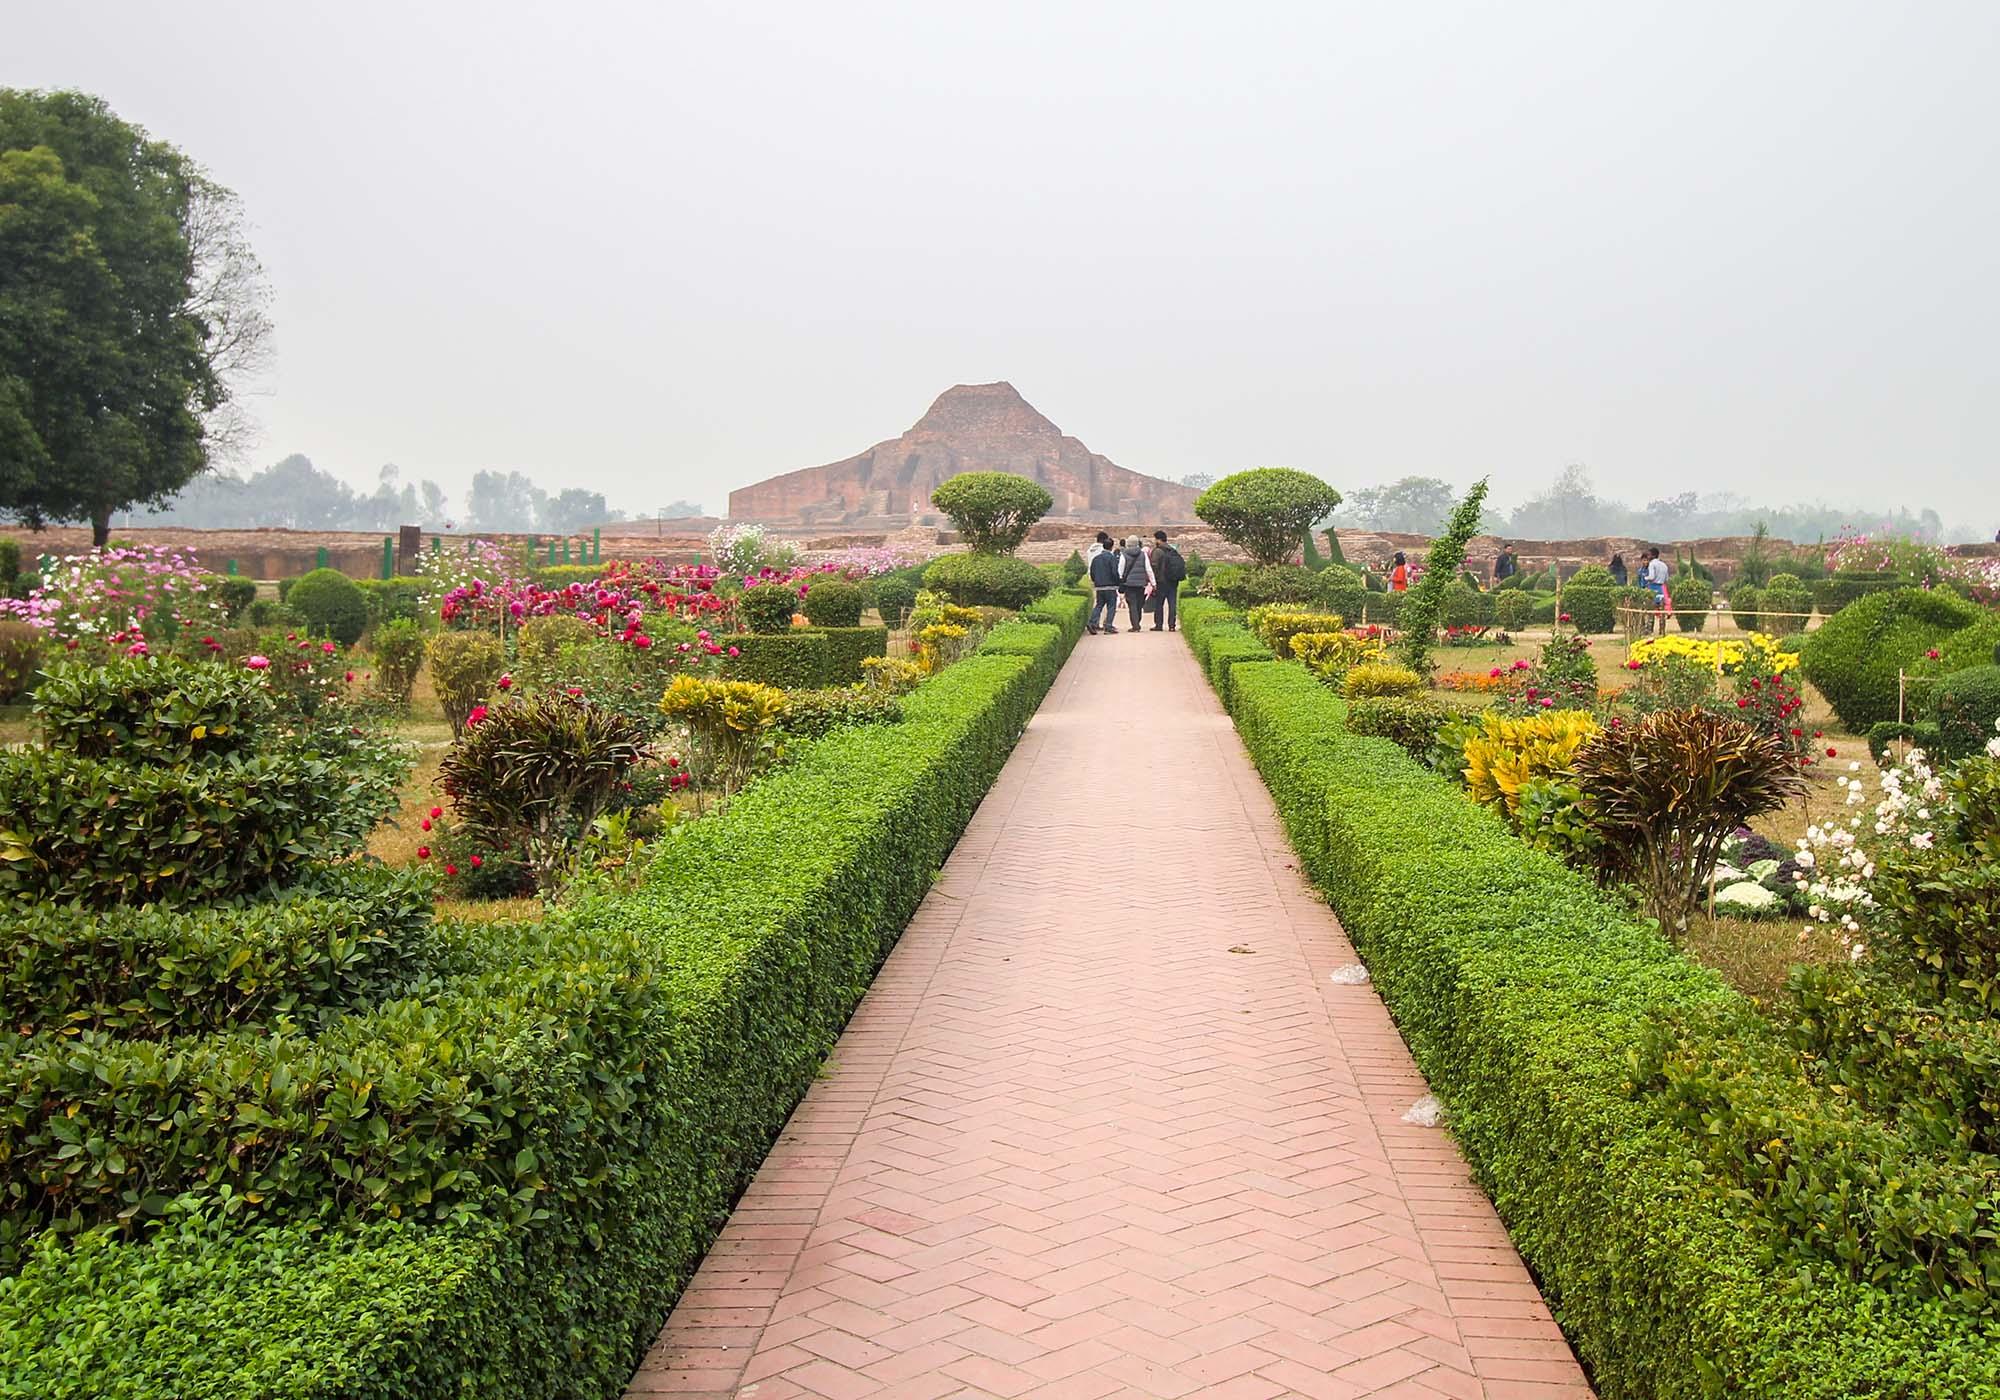 Entering the monastery quadrangle at Paharpur through a colourful surrounding garden. – © Roni Kabir Nurul